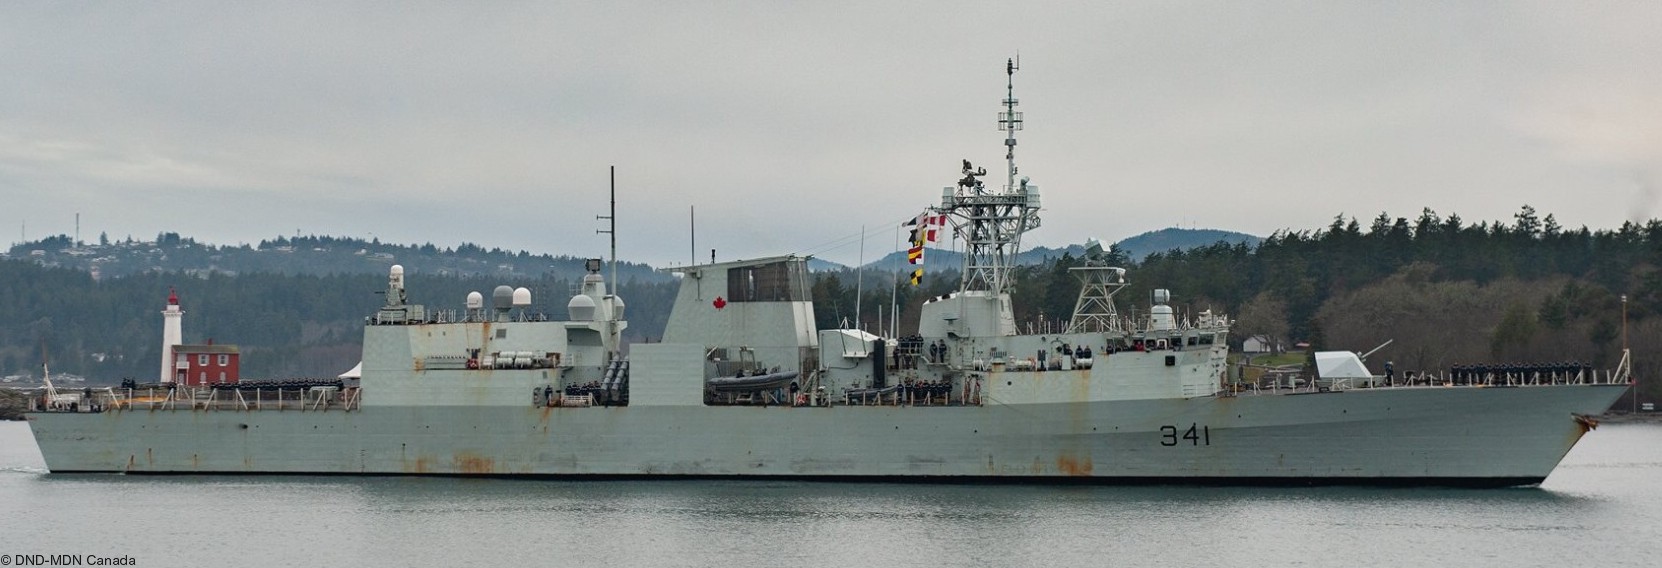 ffh-441 hmcs ottawa halifax class helicopter patrol frigate ncsm royal canadian navy 25